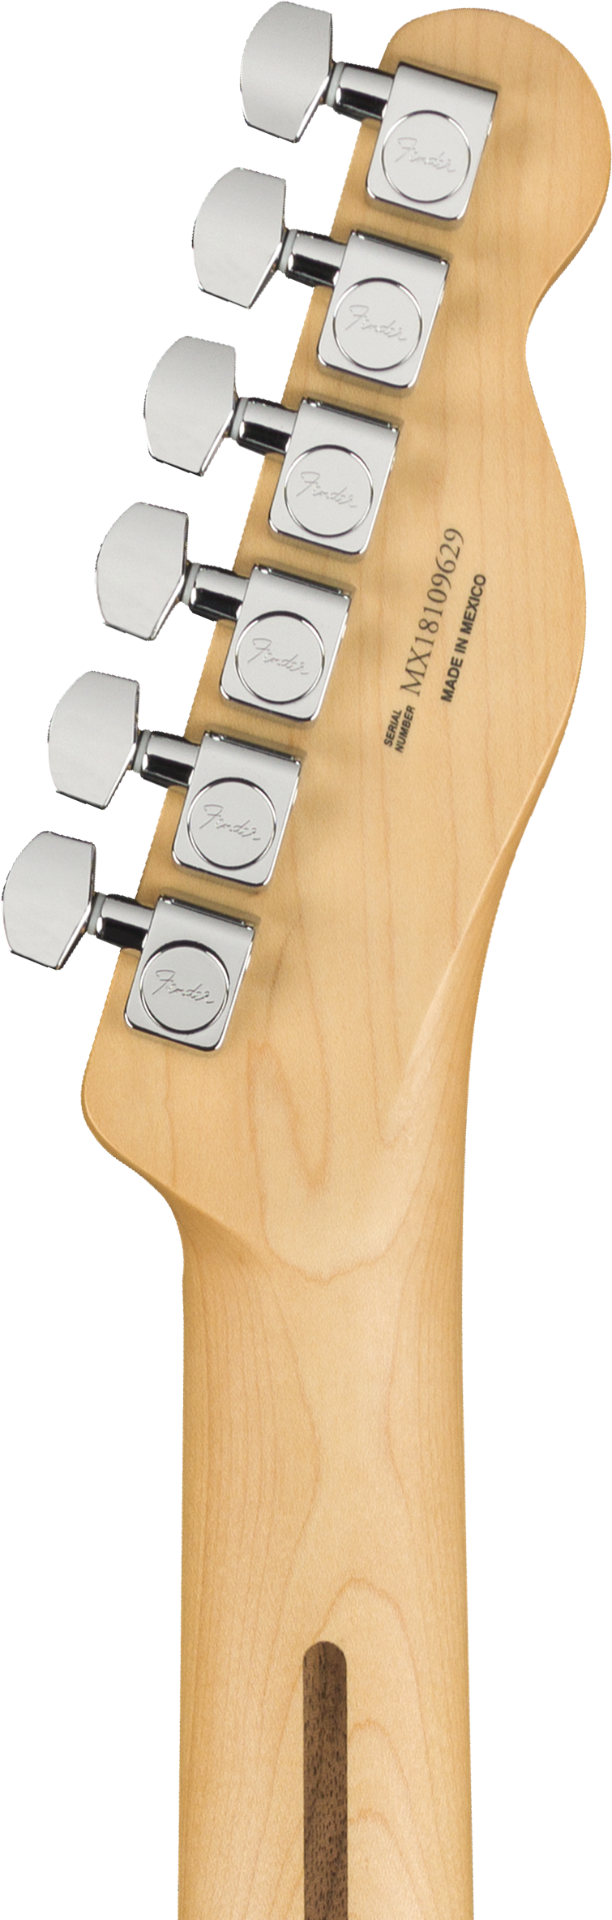 Fender Player Telecaster Electric Guitar - Maple LH Fingerboard - Buttercream